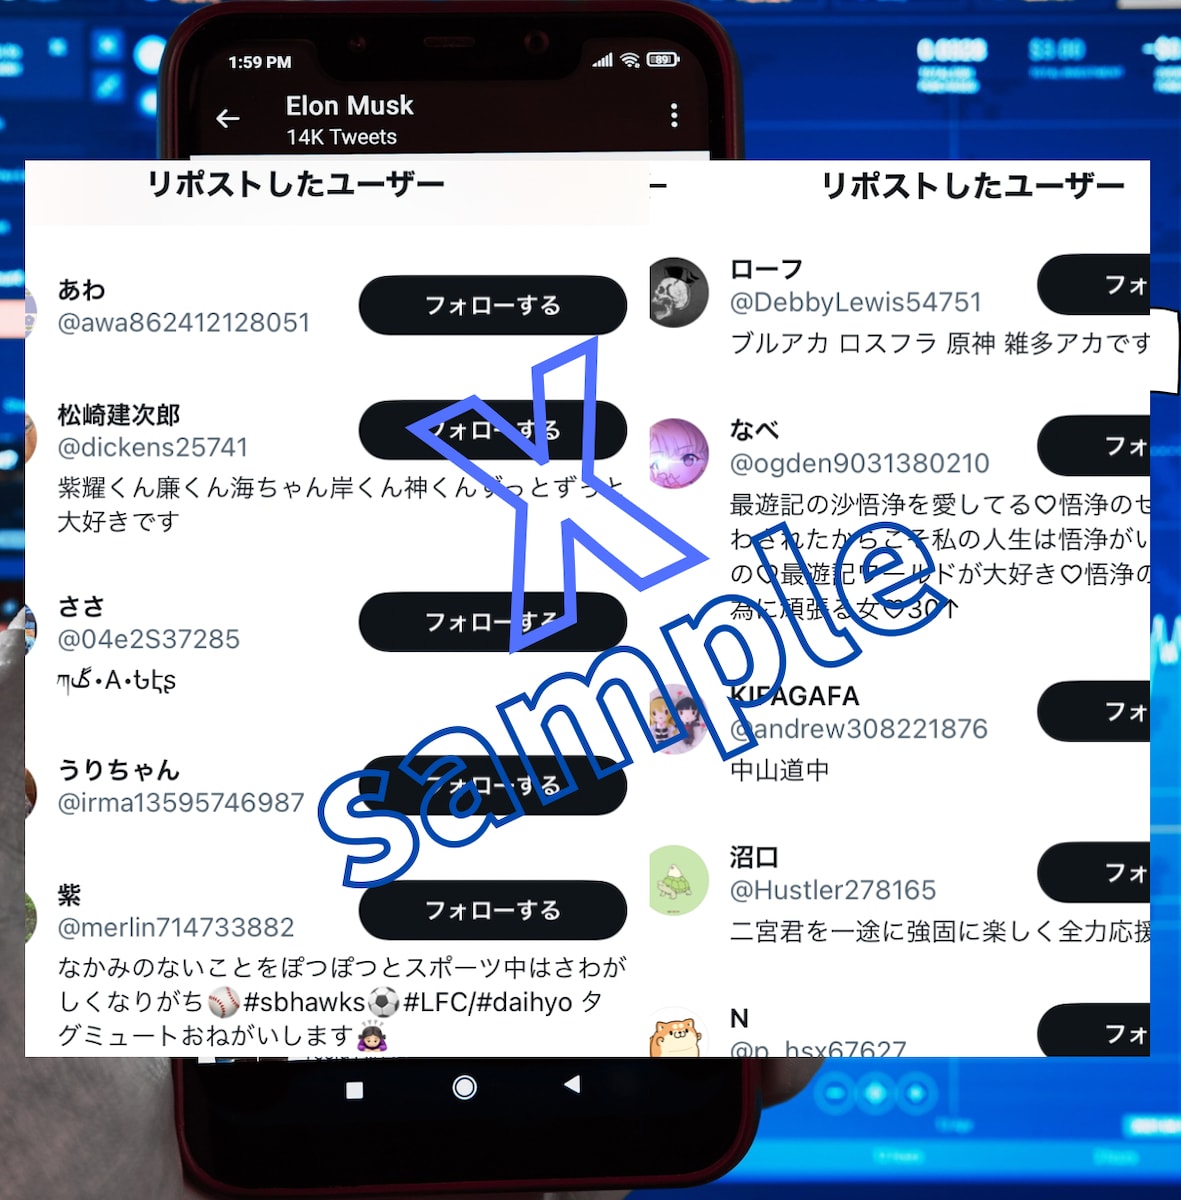 X Twitter 日本人フォロワーのsample